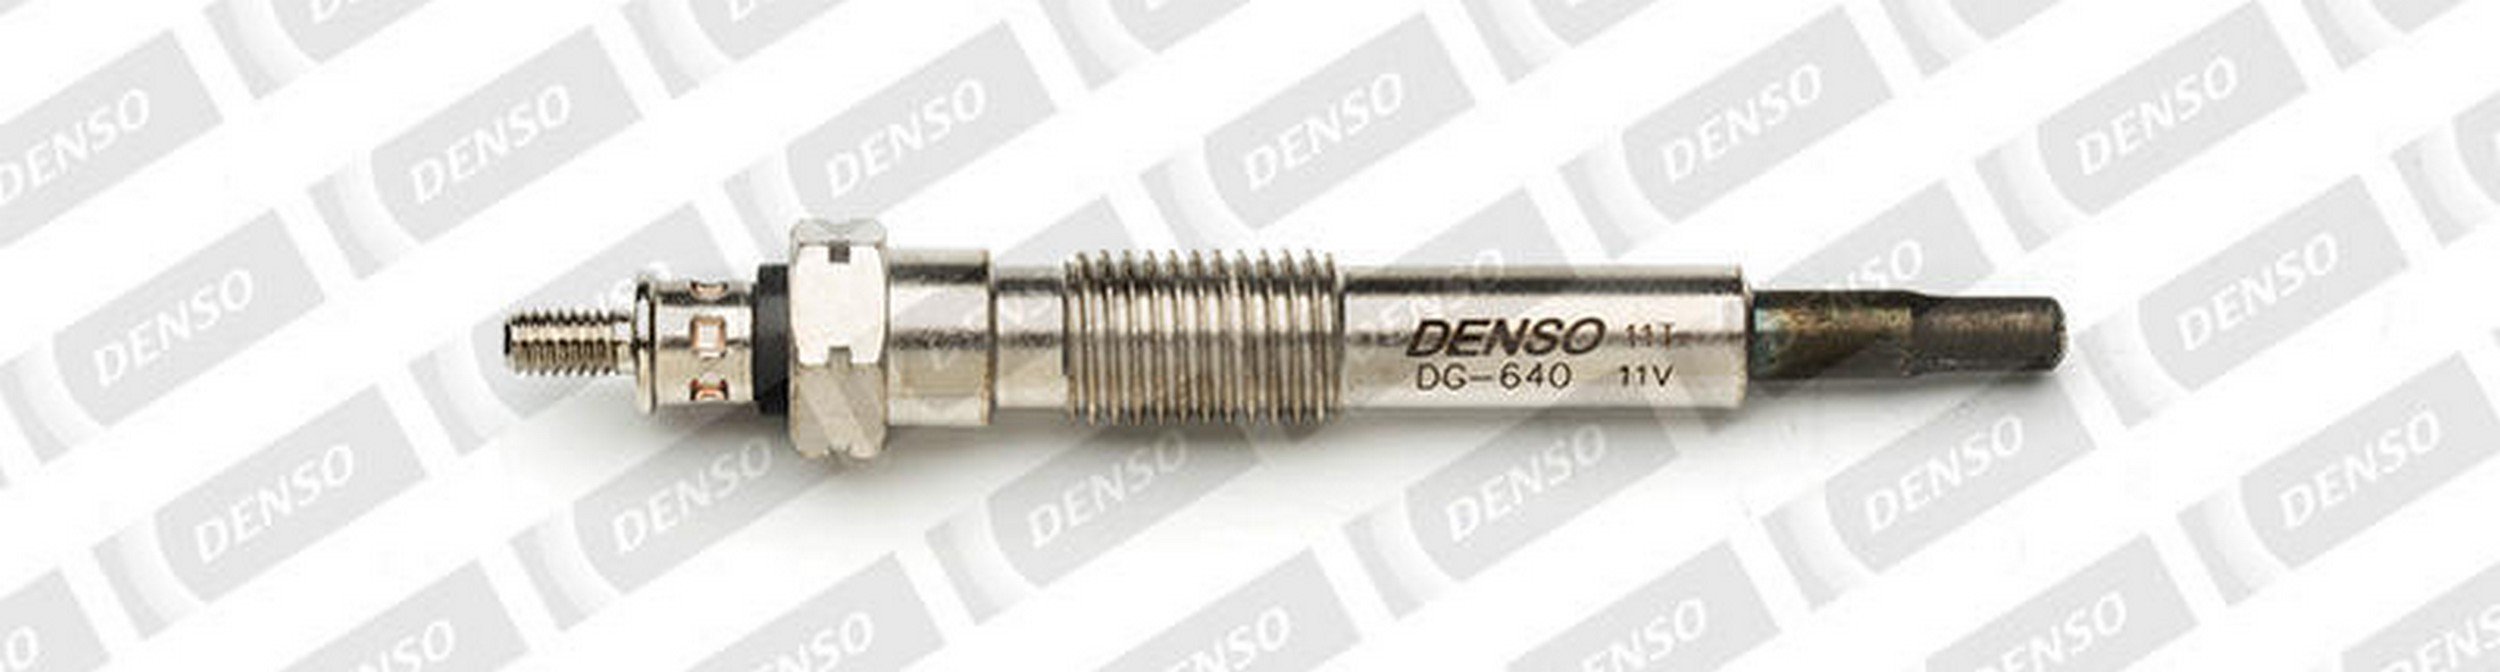 DENSO-AU DG-640